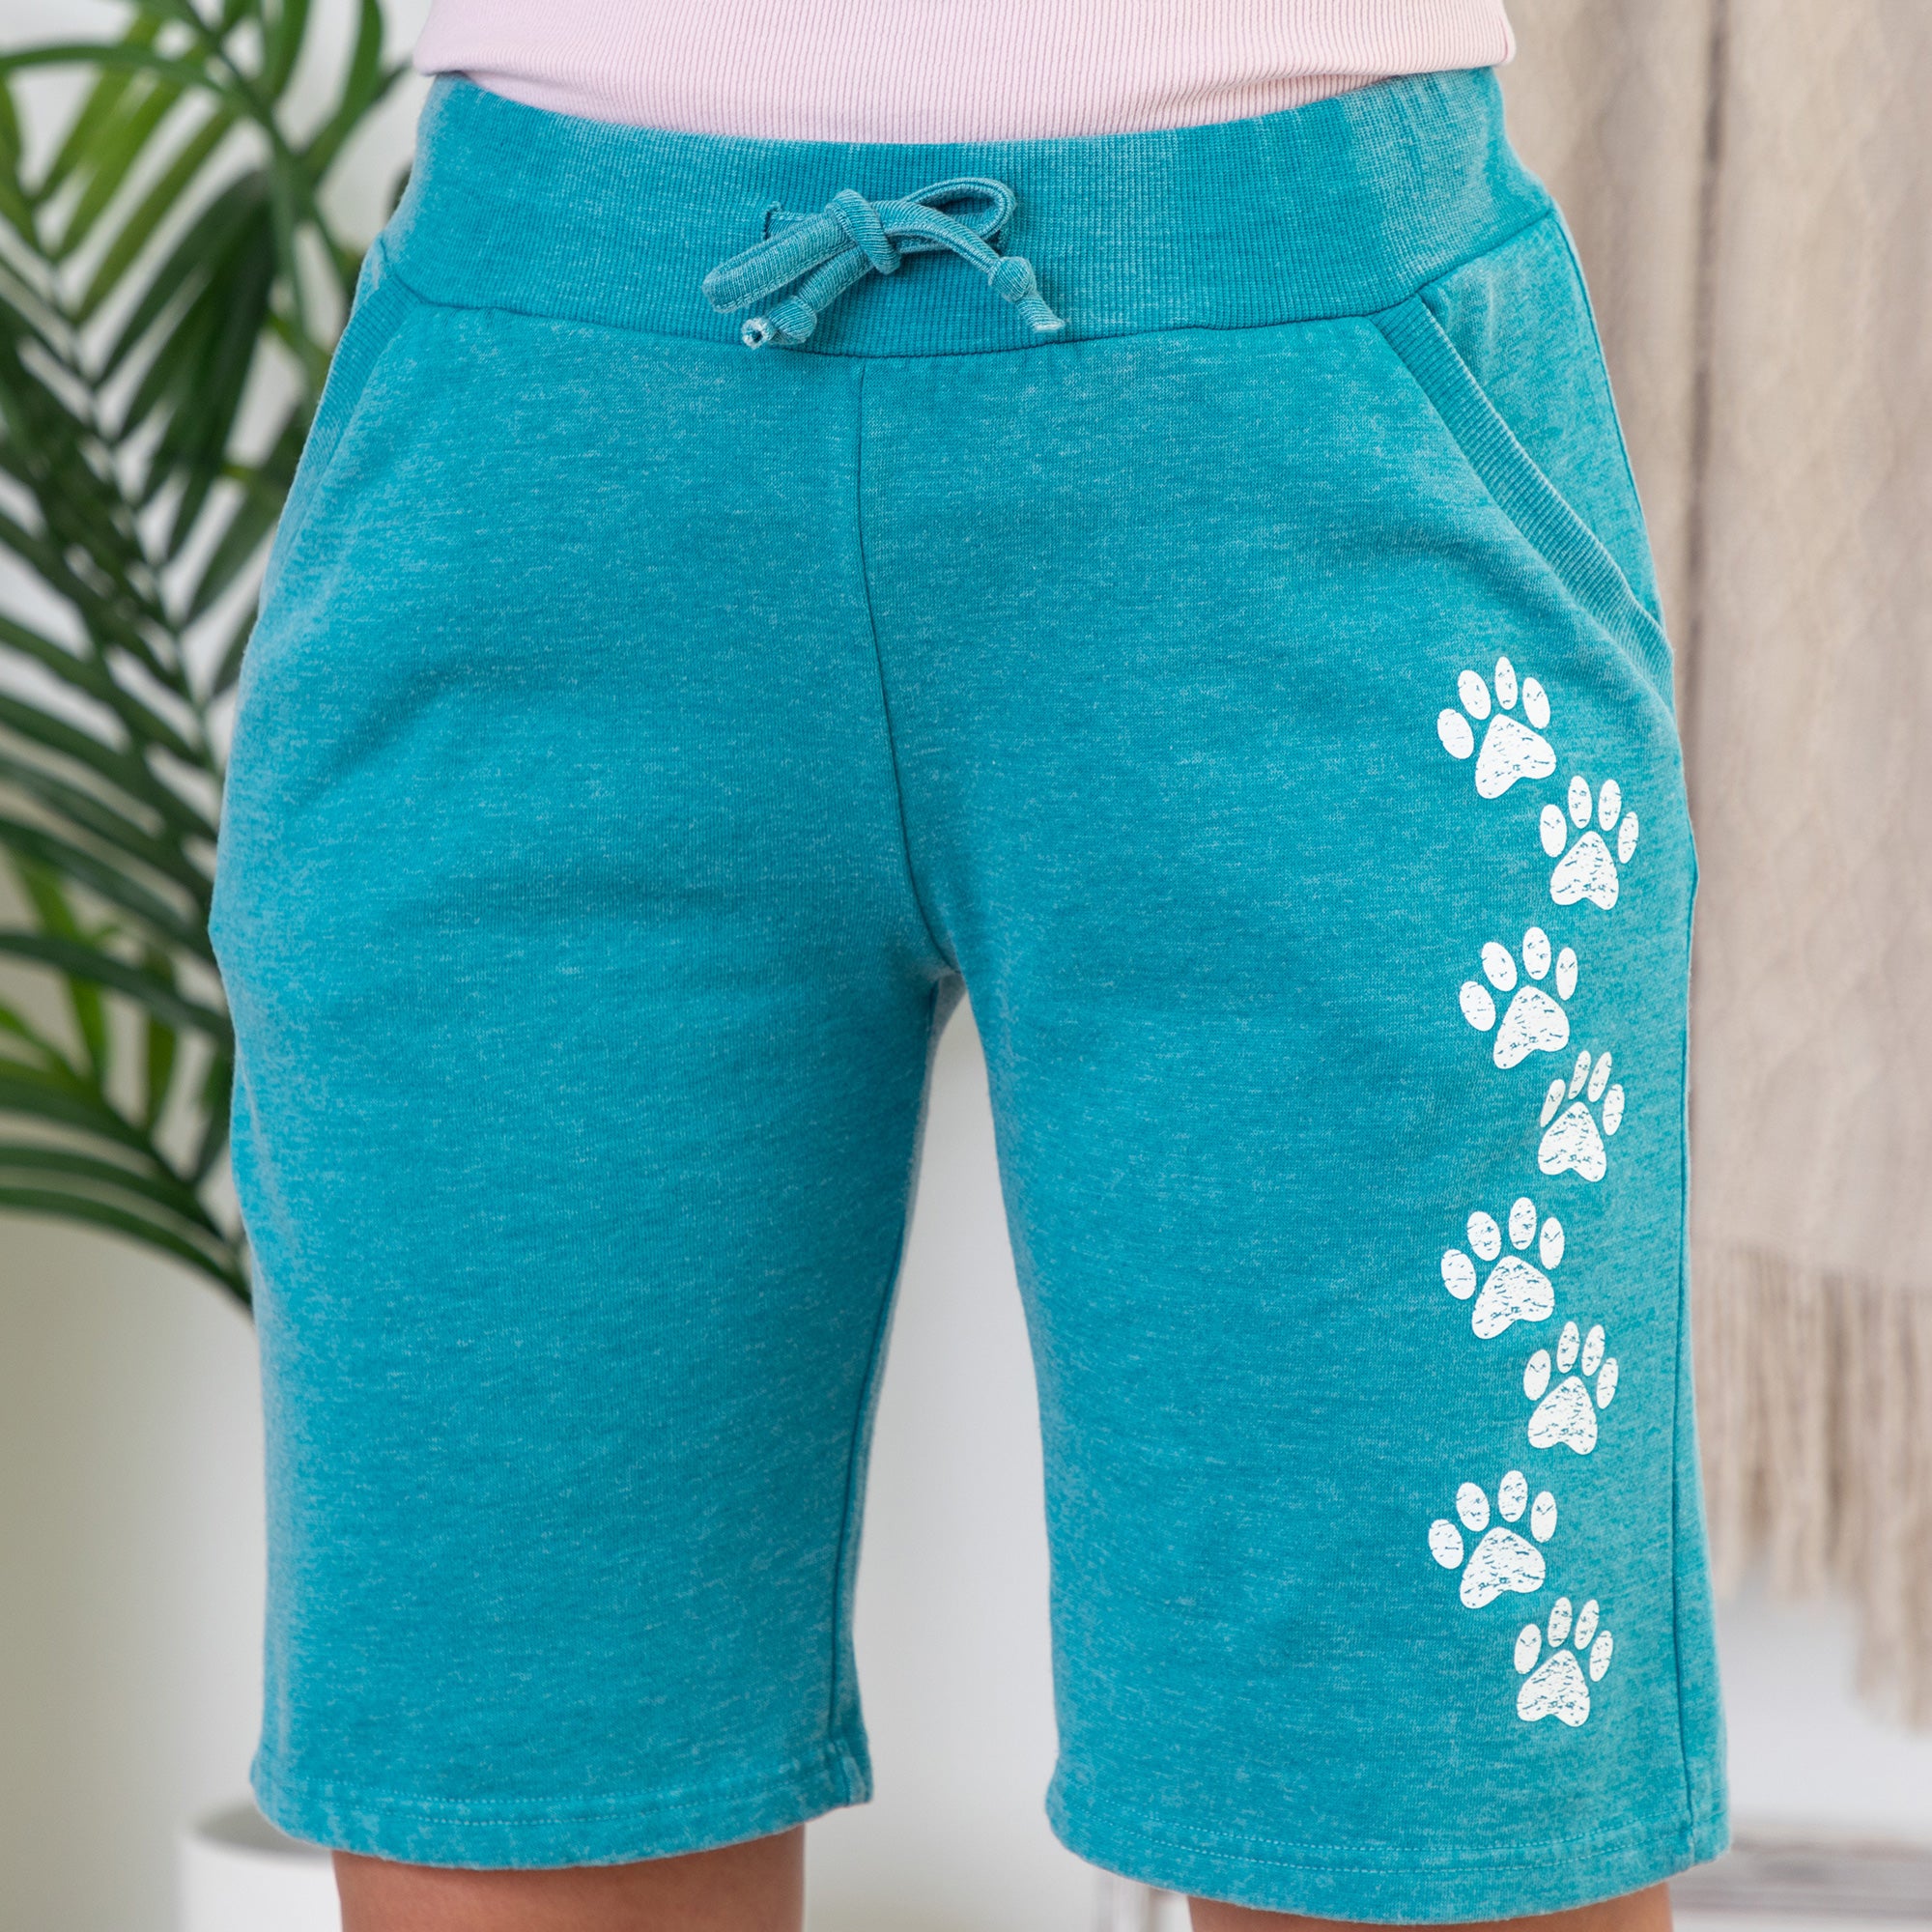 Walking Paws Burnout Board Shorts - Turquoise - 2X